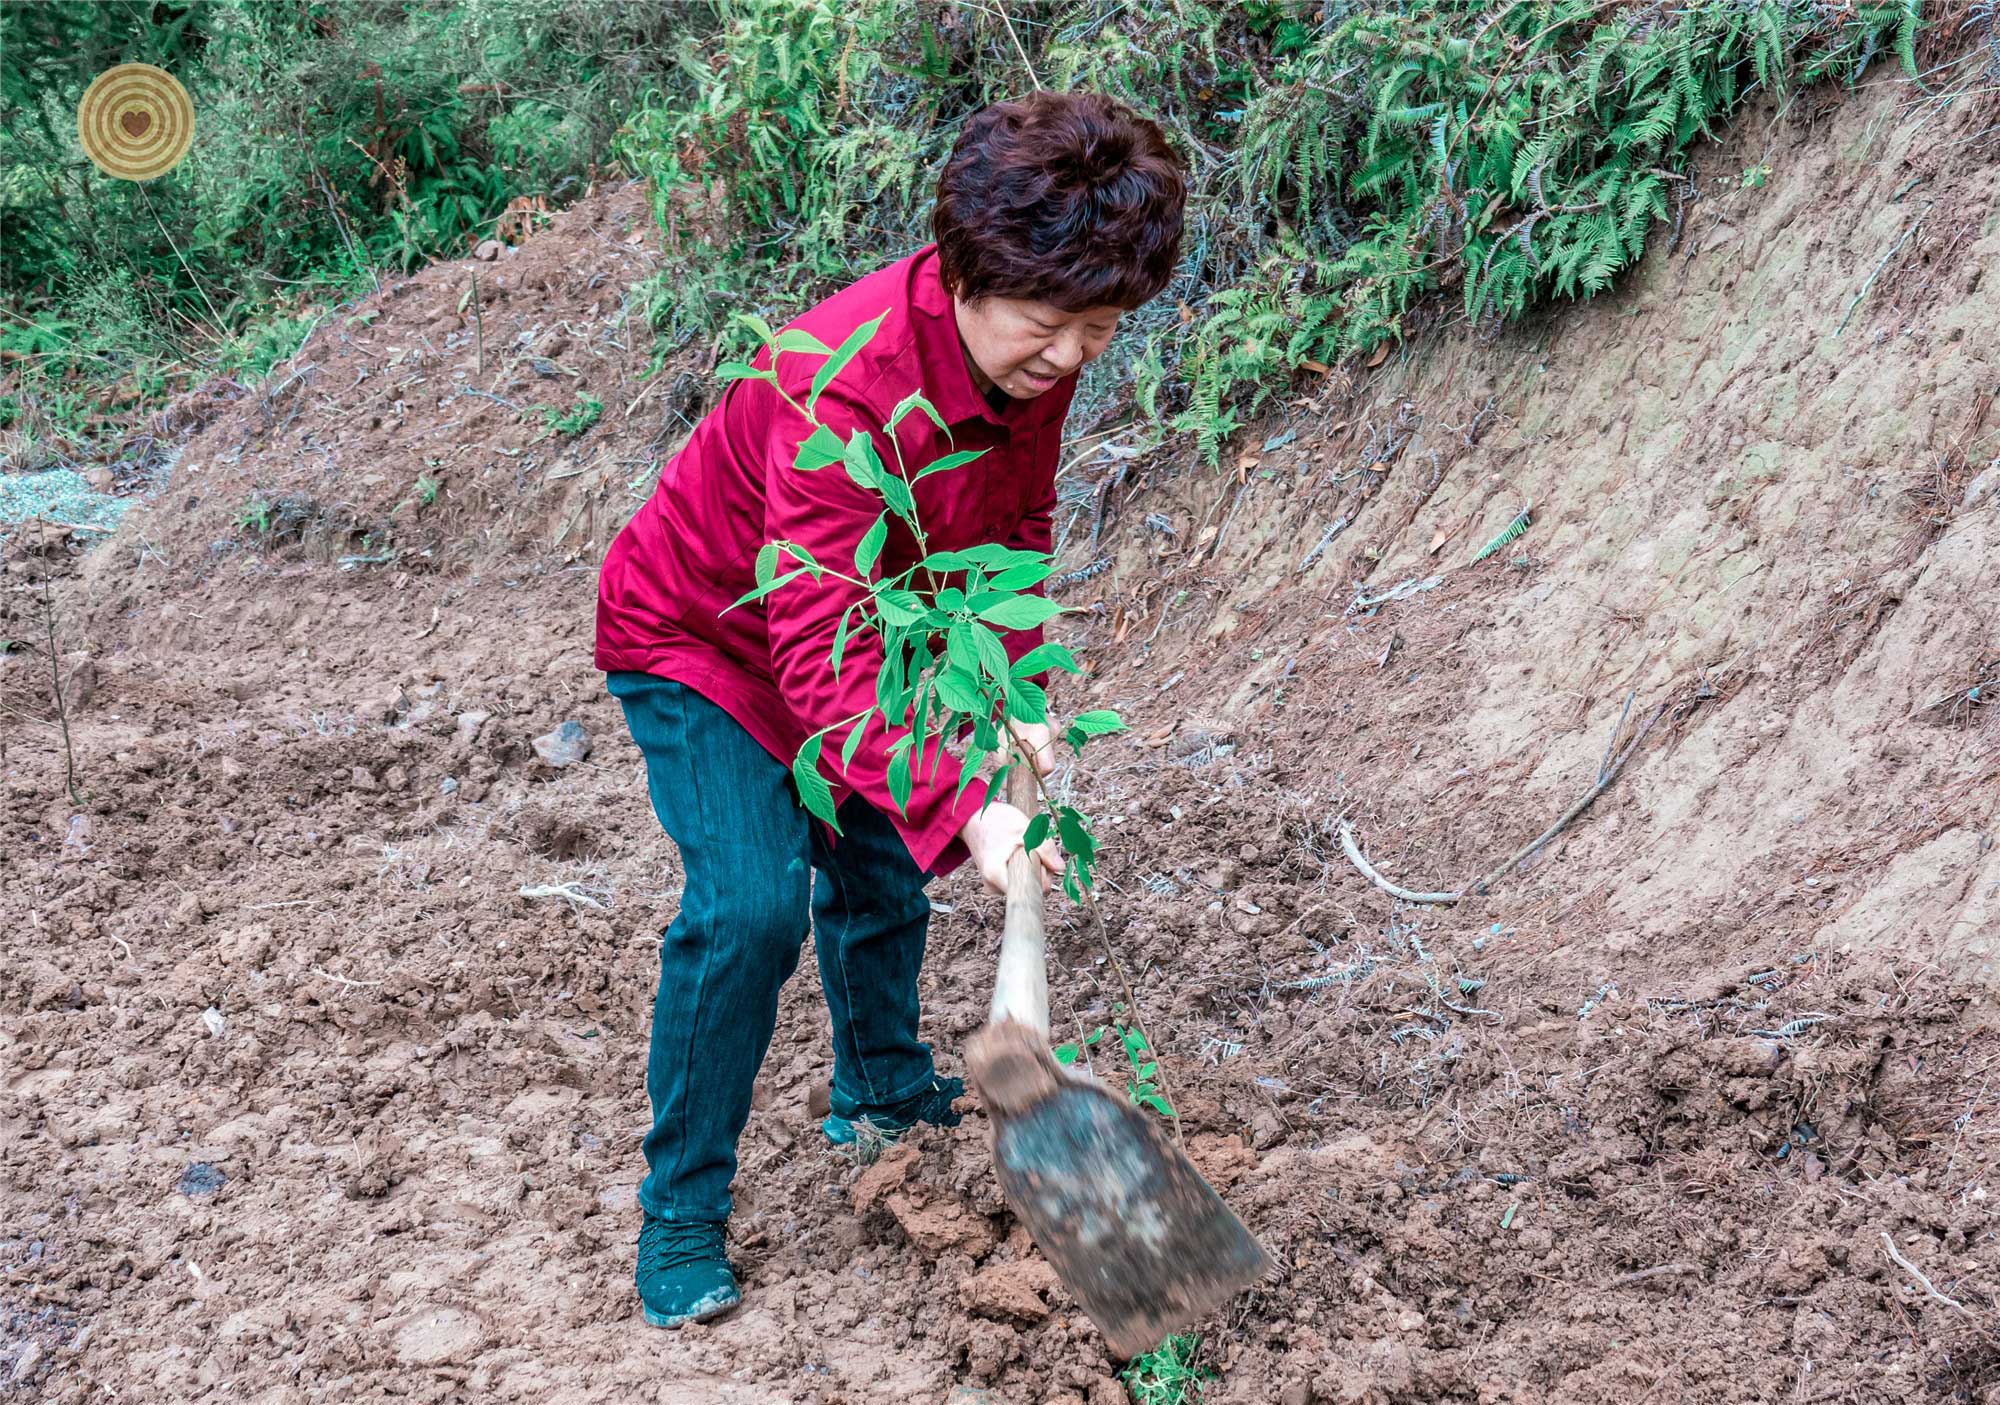 WWD 2021, Tree Planting, China